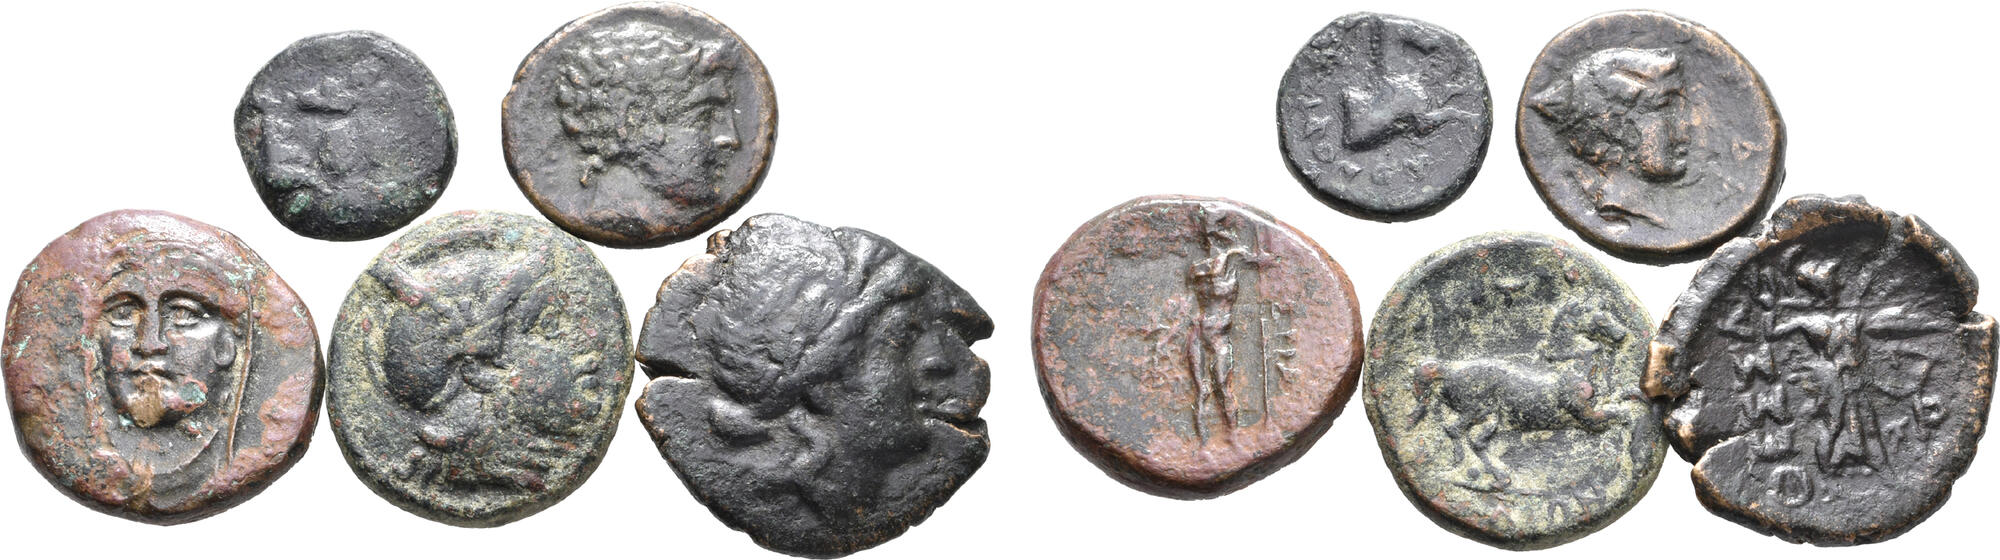 Thessalian Liga Larissa Tesalia 196bc Apollo Athena Antigua moneda griega i47172 